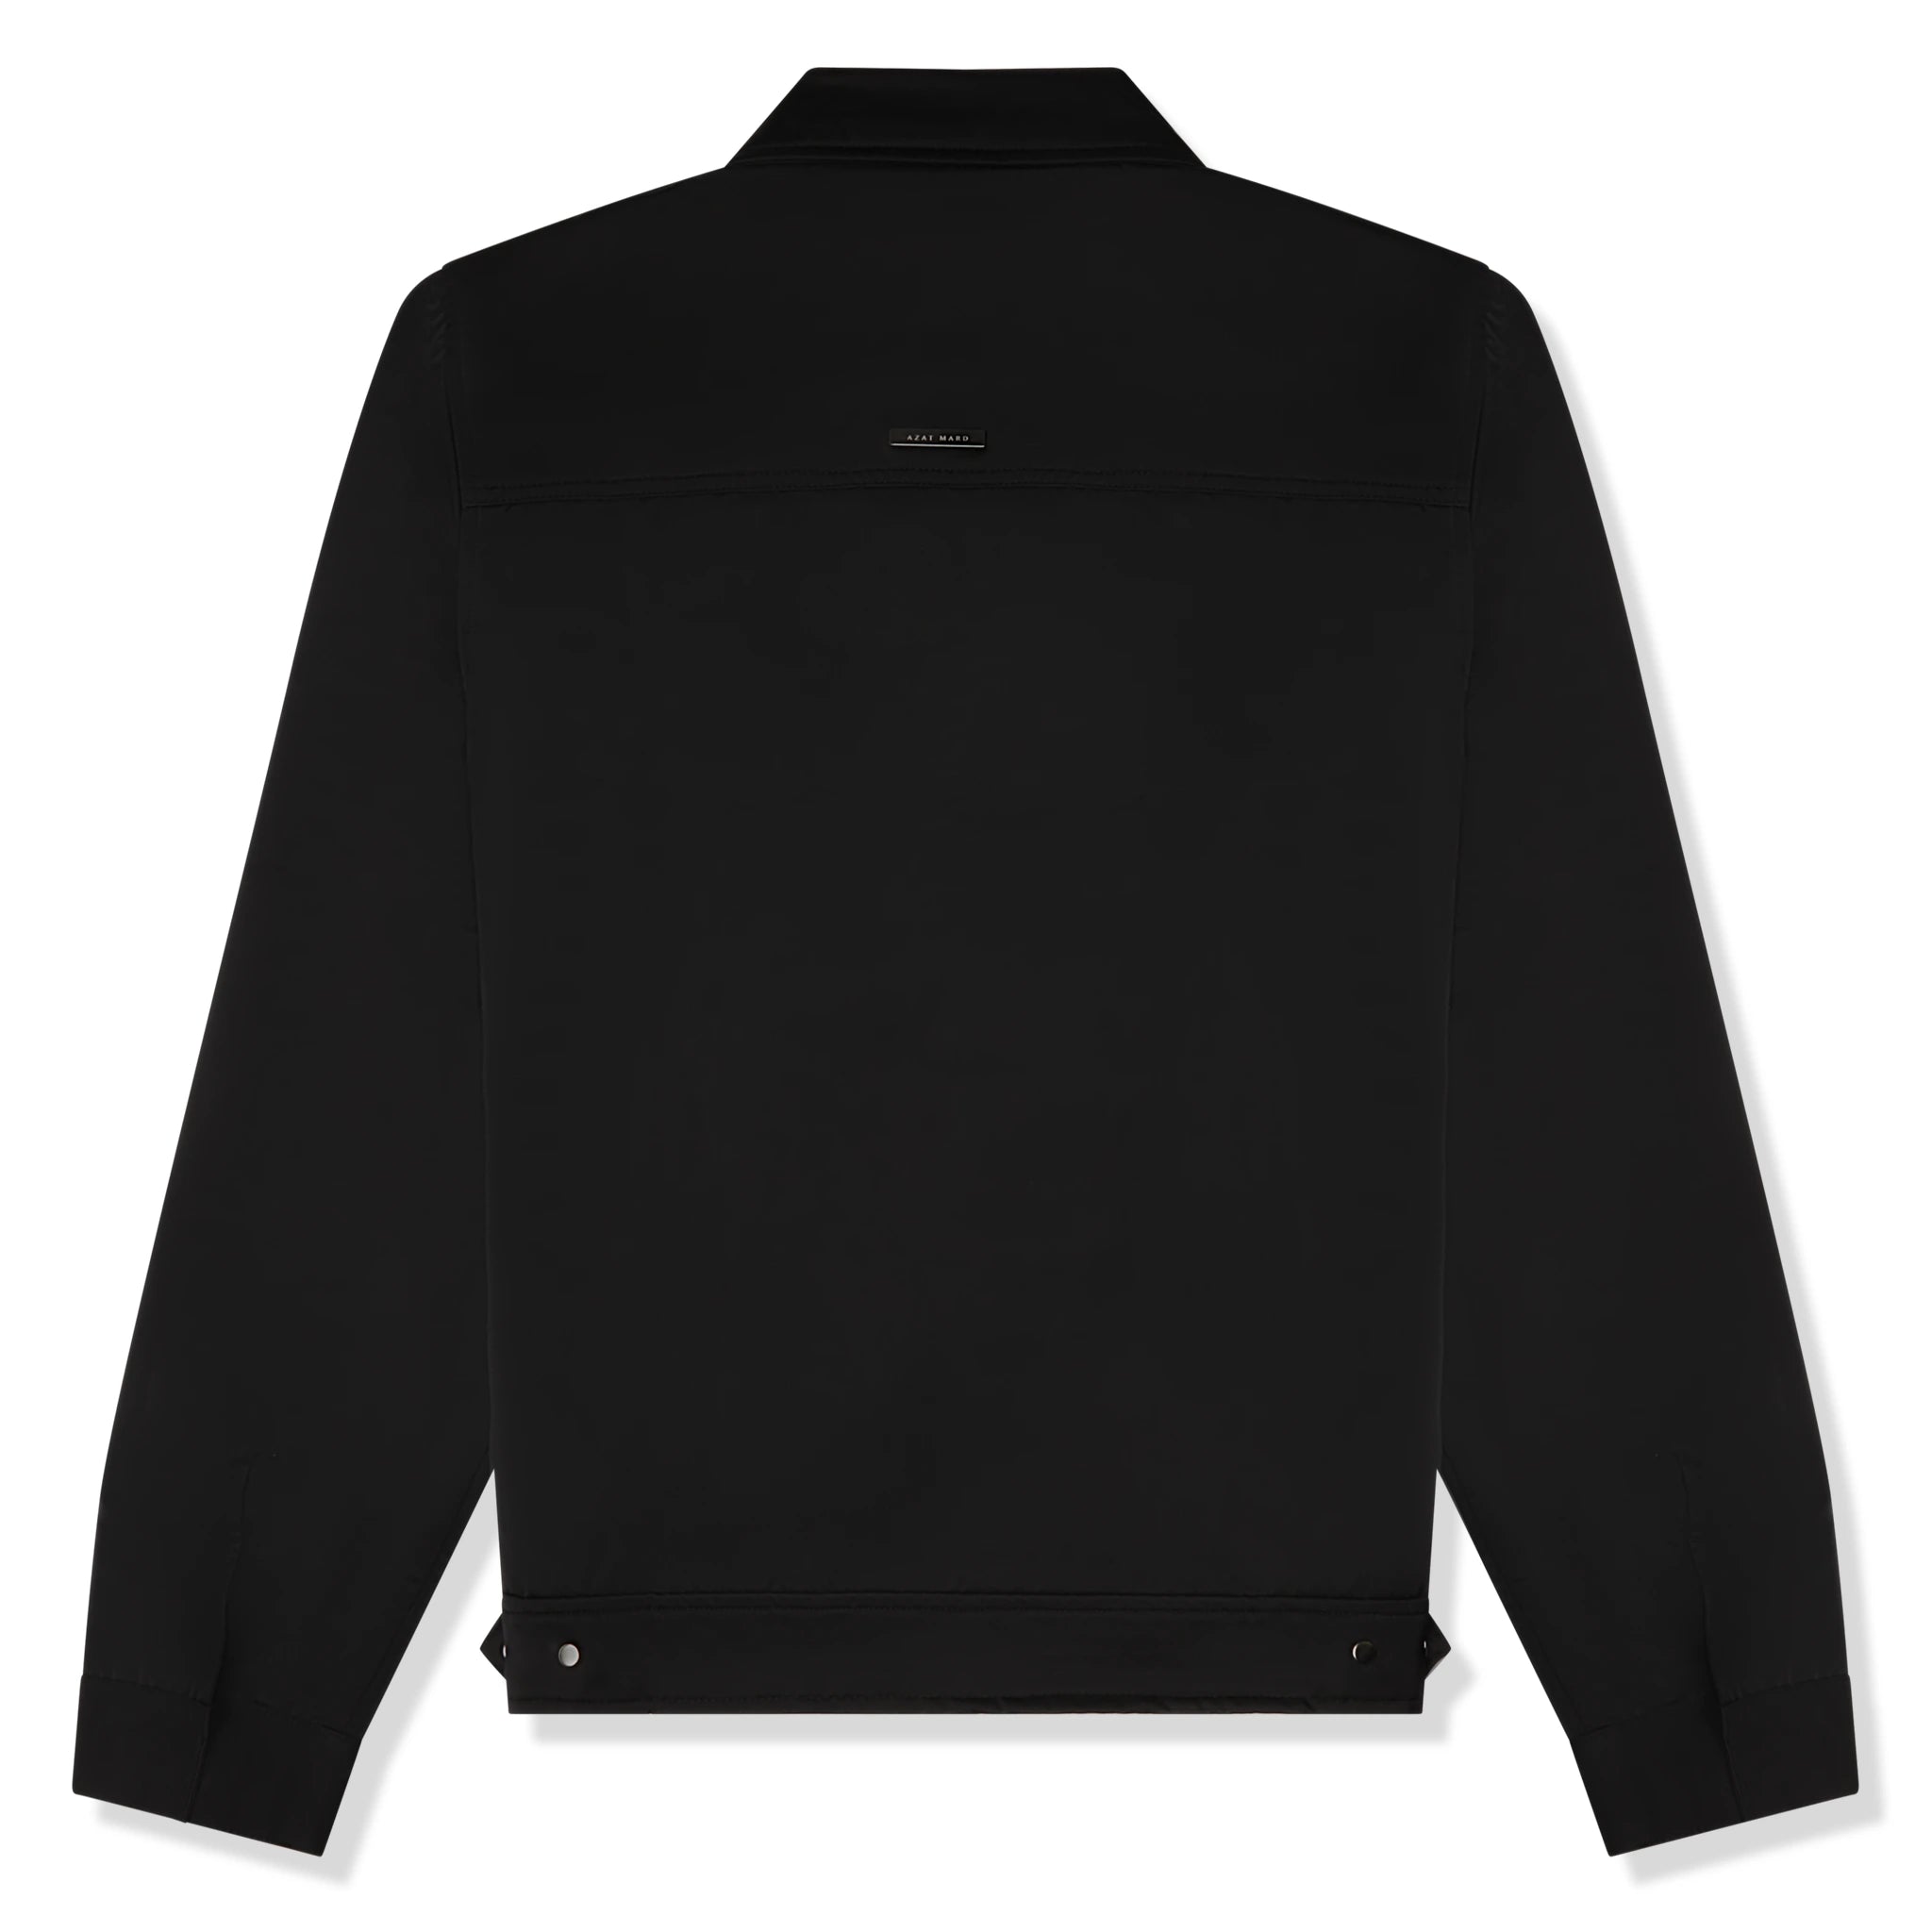 Back view of Azat Mard Nylon Les Gens Black Zipper Jacket